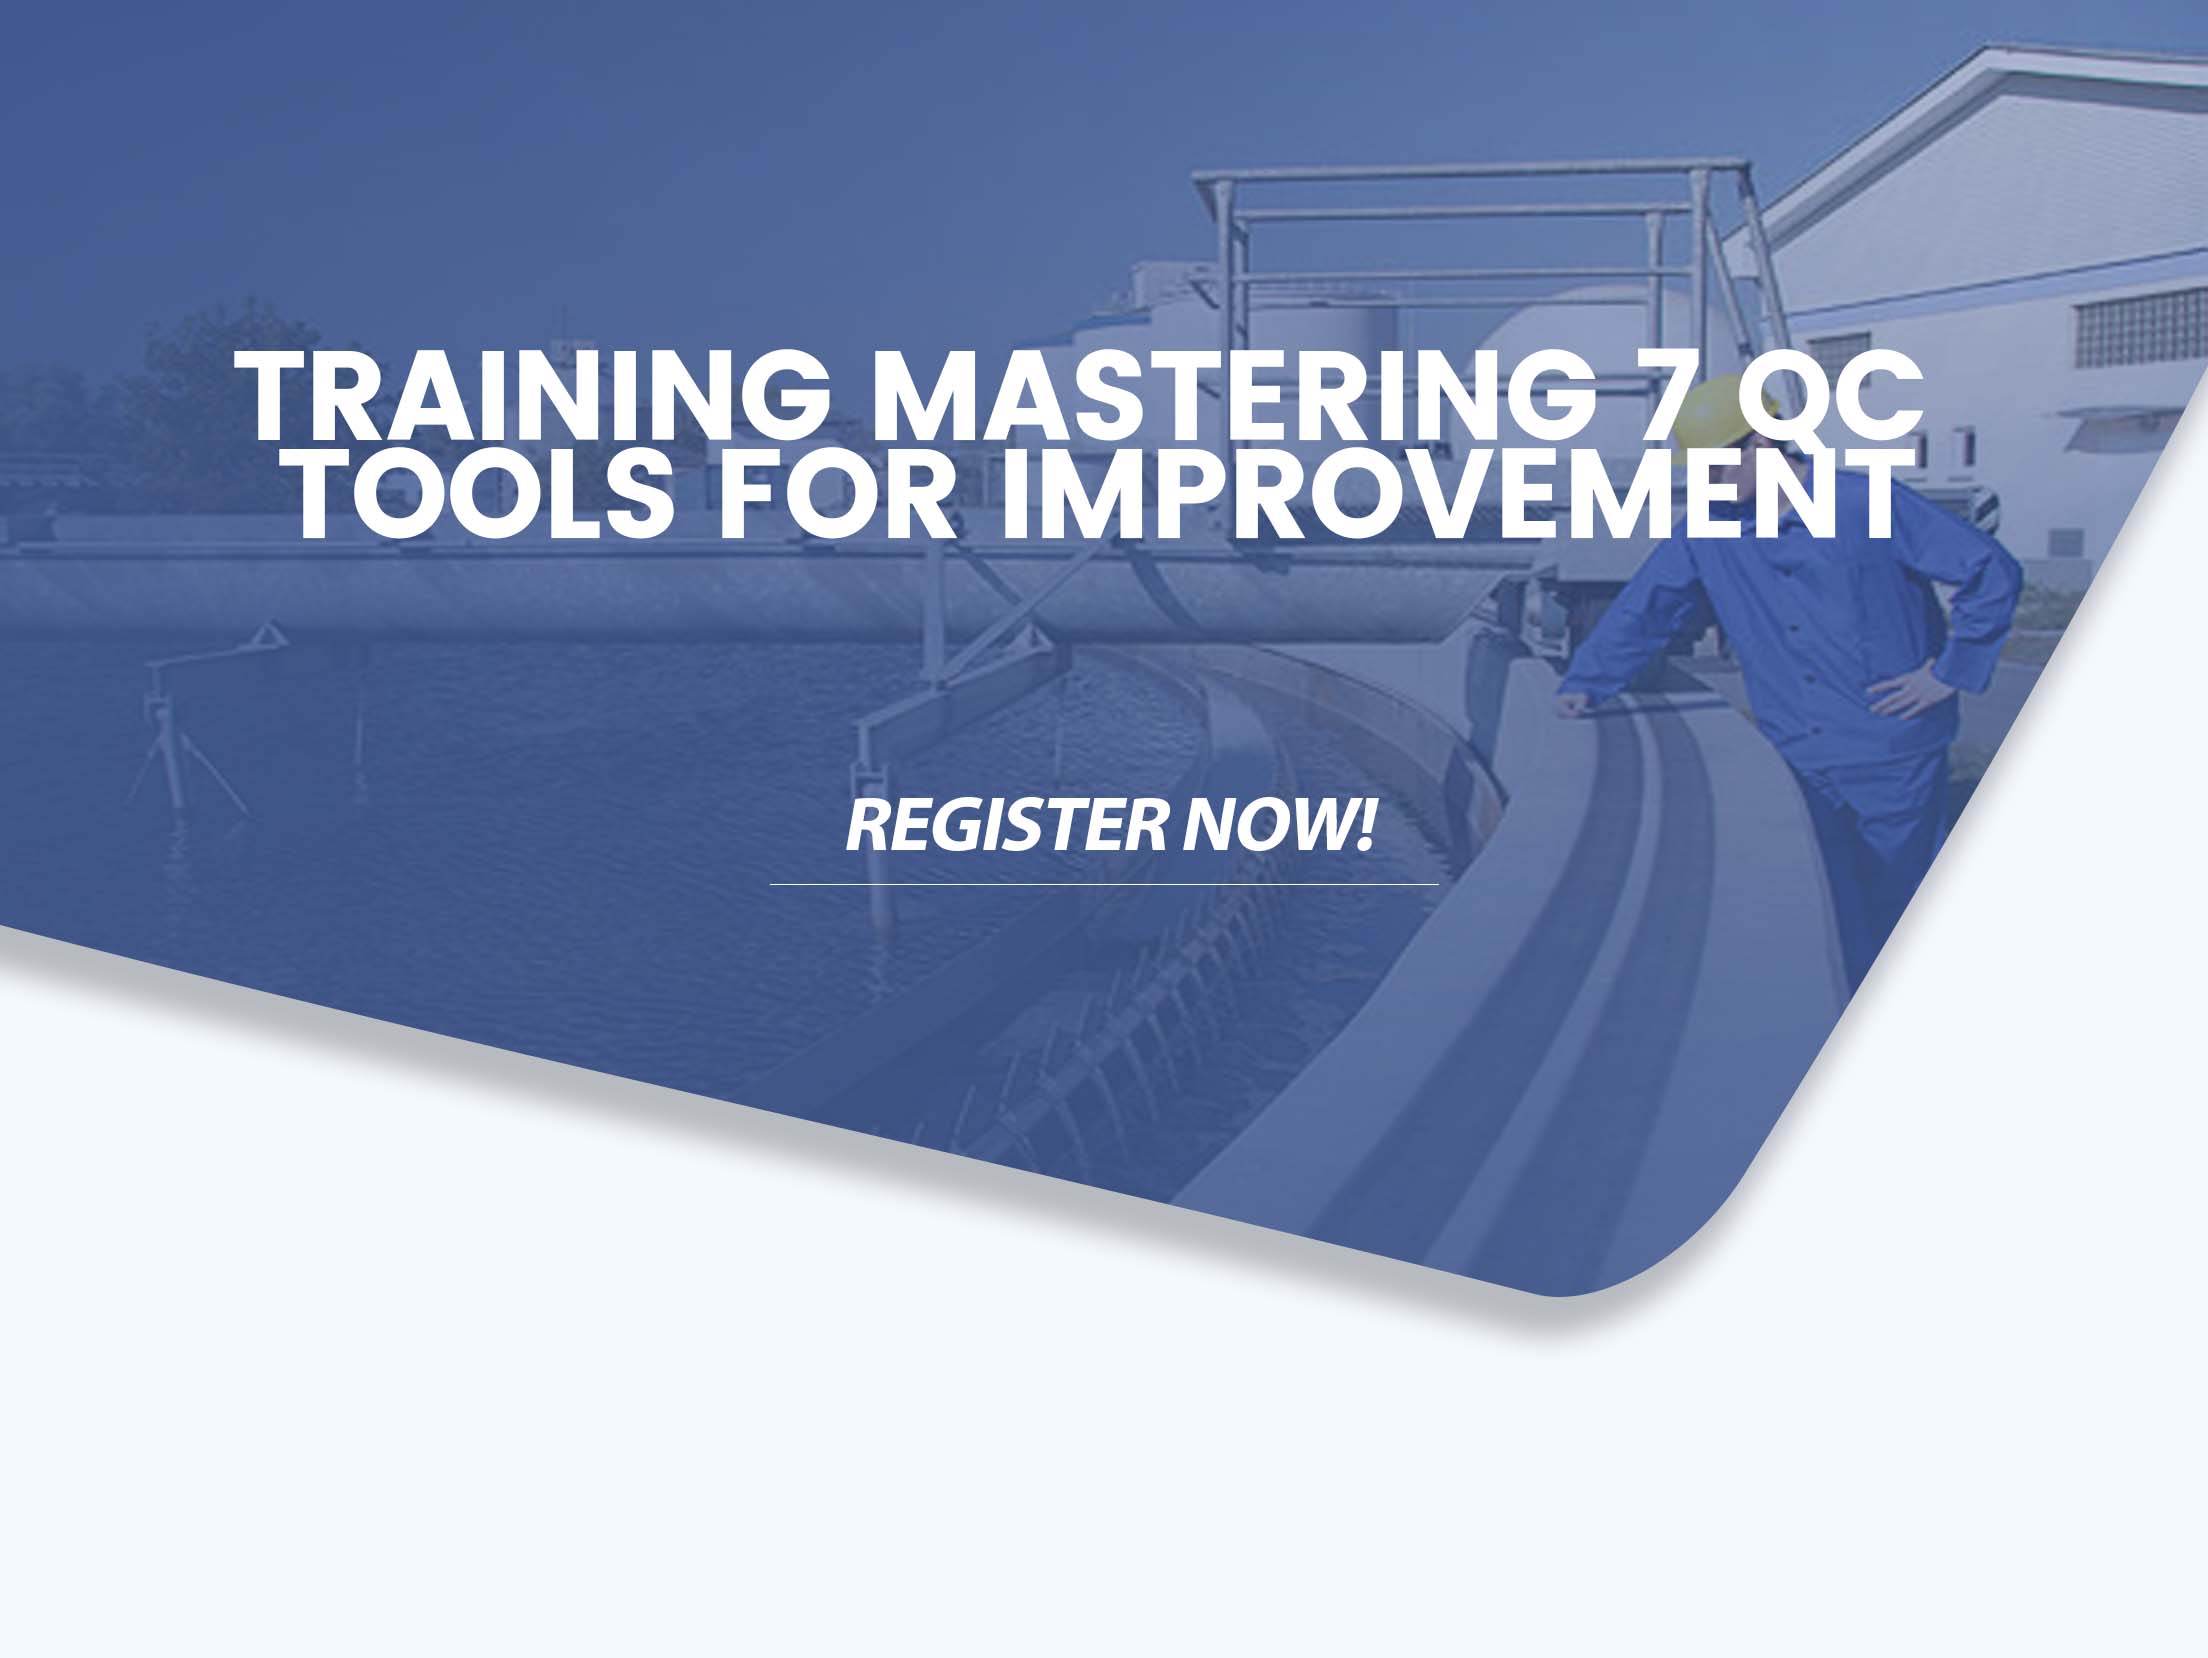 Training Mastering 7 QC Tools for Improvement